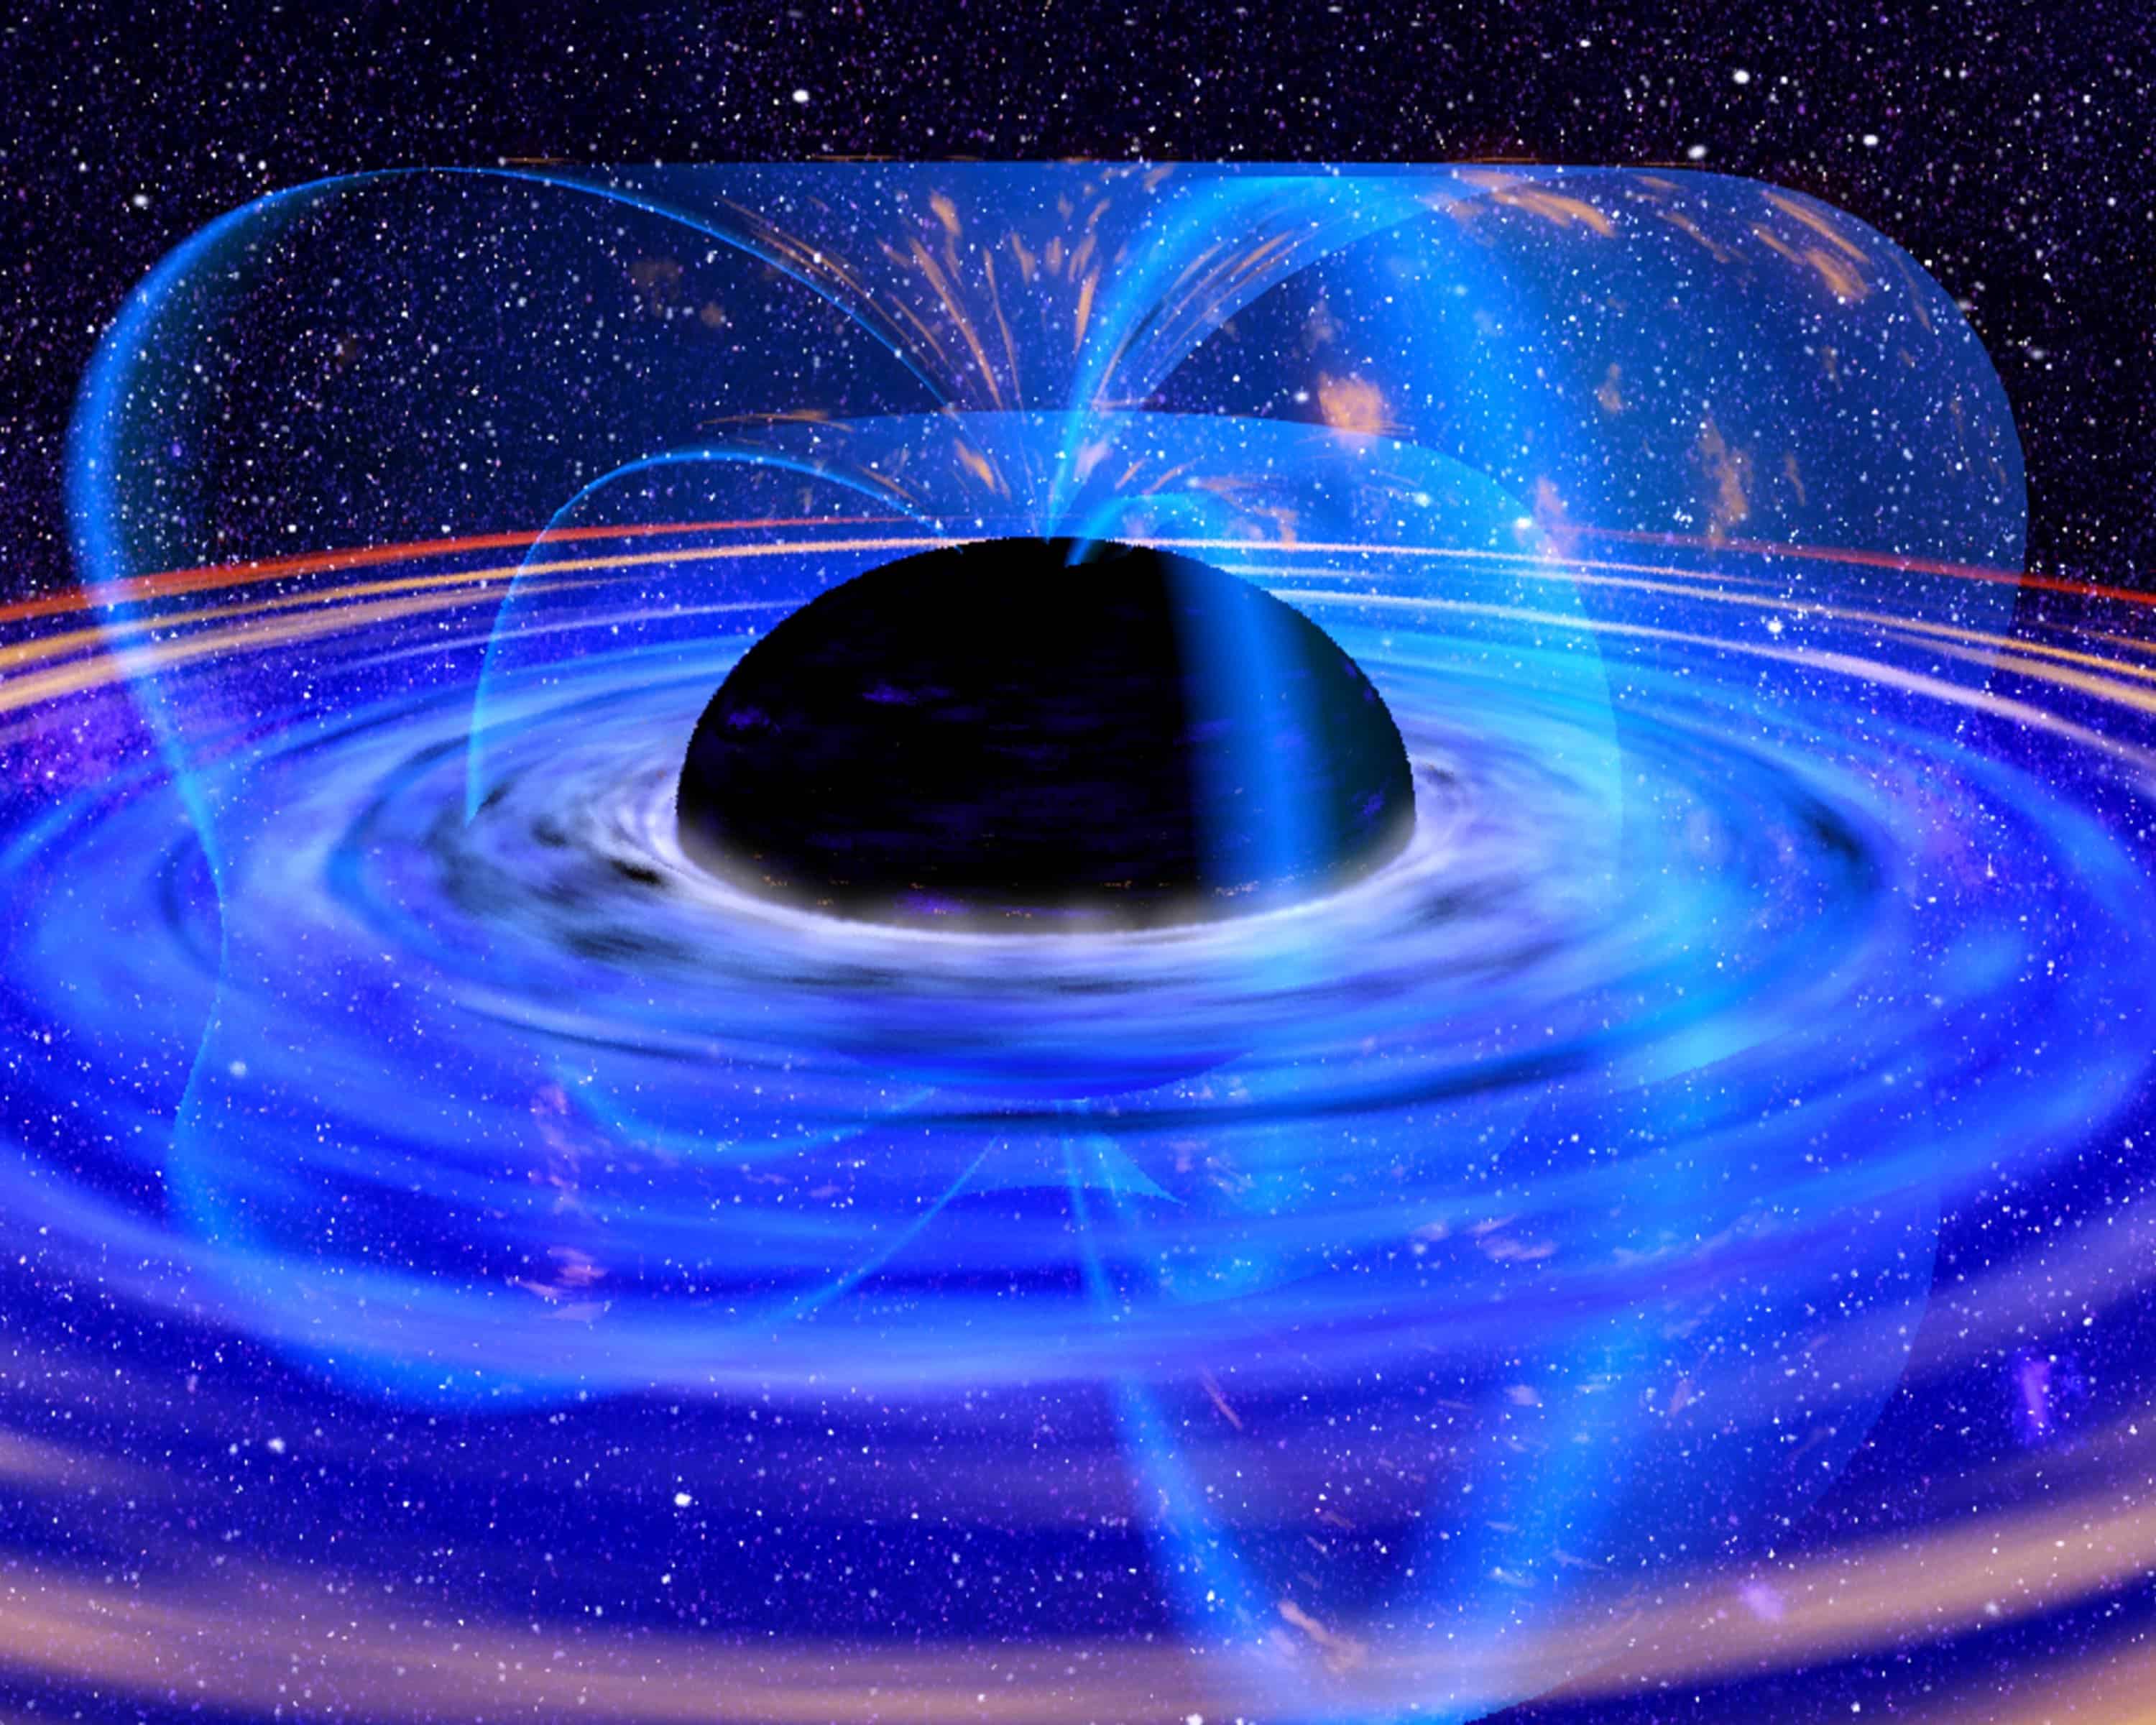 Artistic representation of a black hole. Image credits: NASA / ESA.